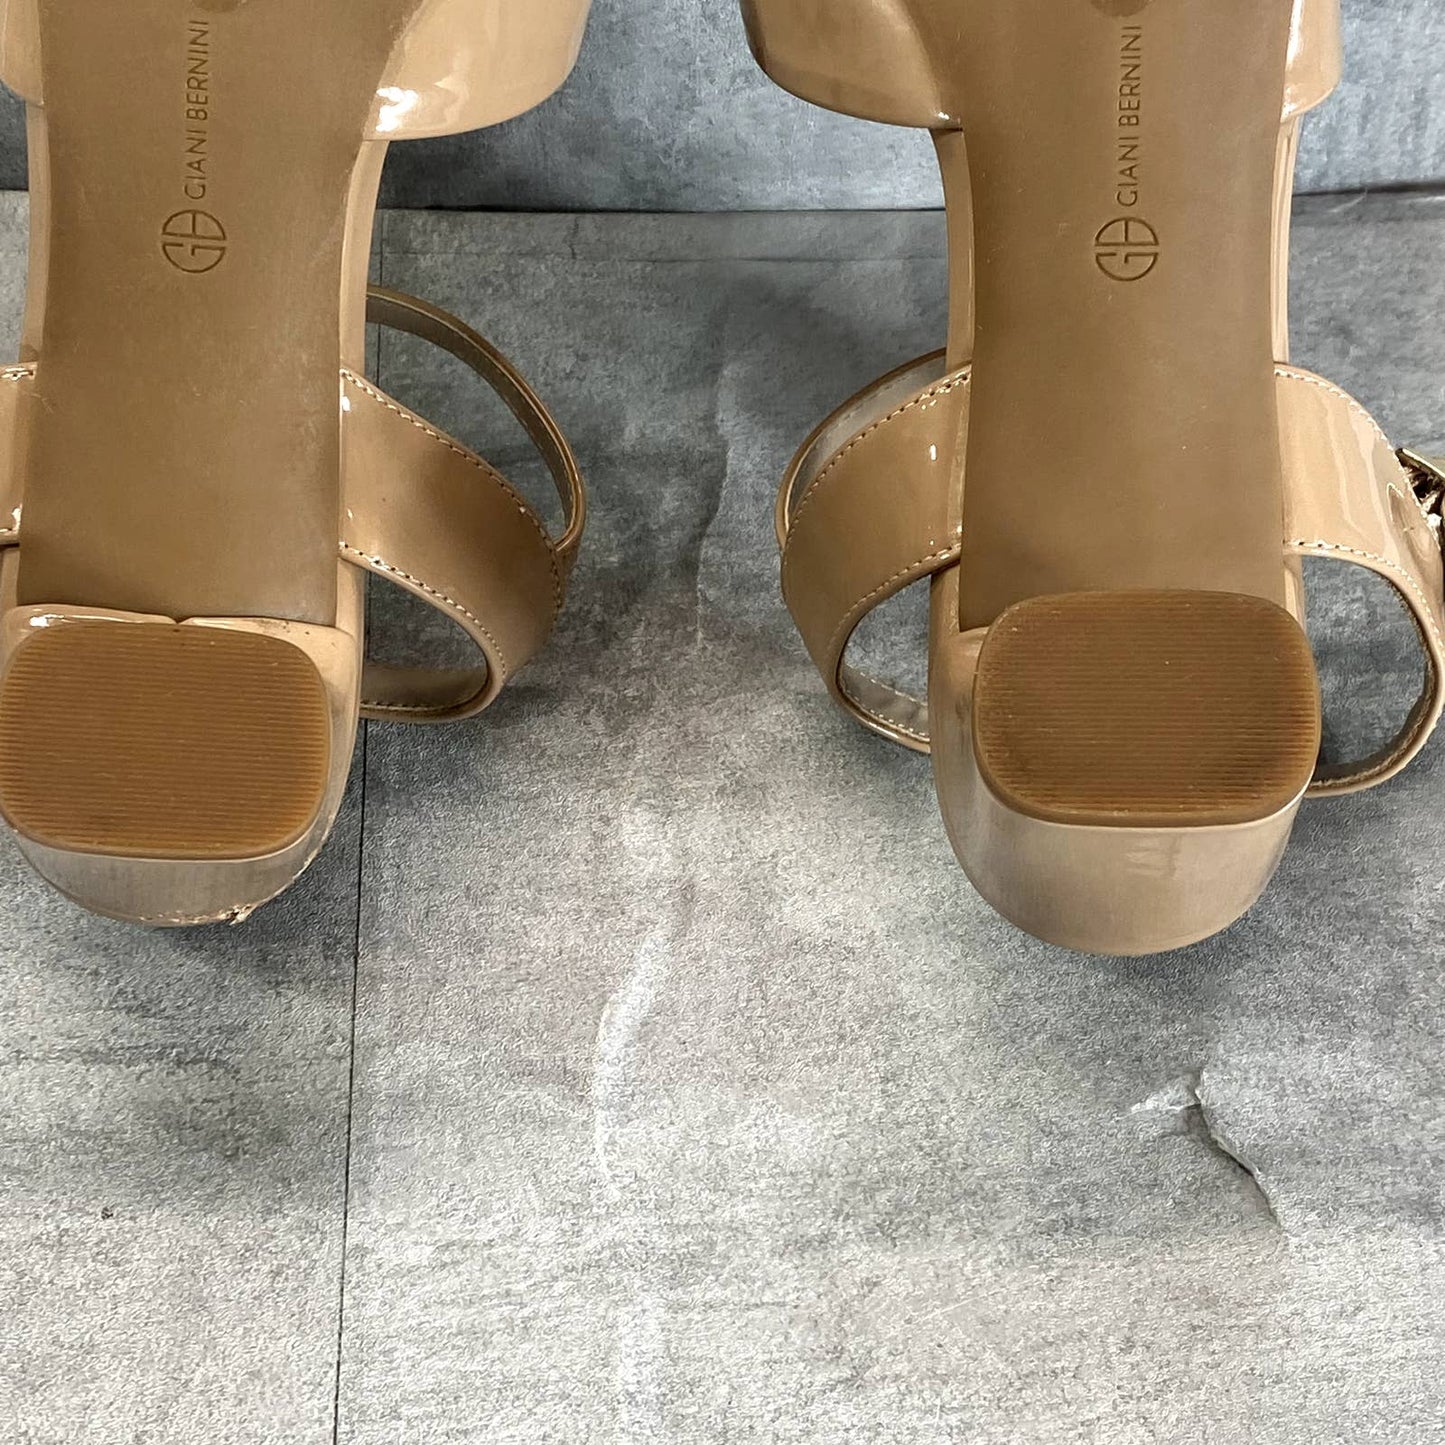 GIANI BERNINI Women’s Nude Patent Zummaa Square-Toe Dress Sandals SZ 9